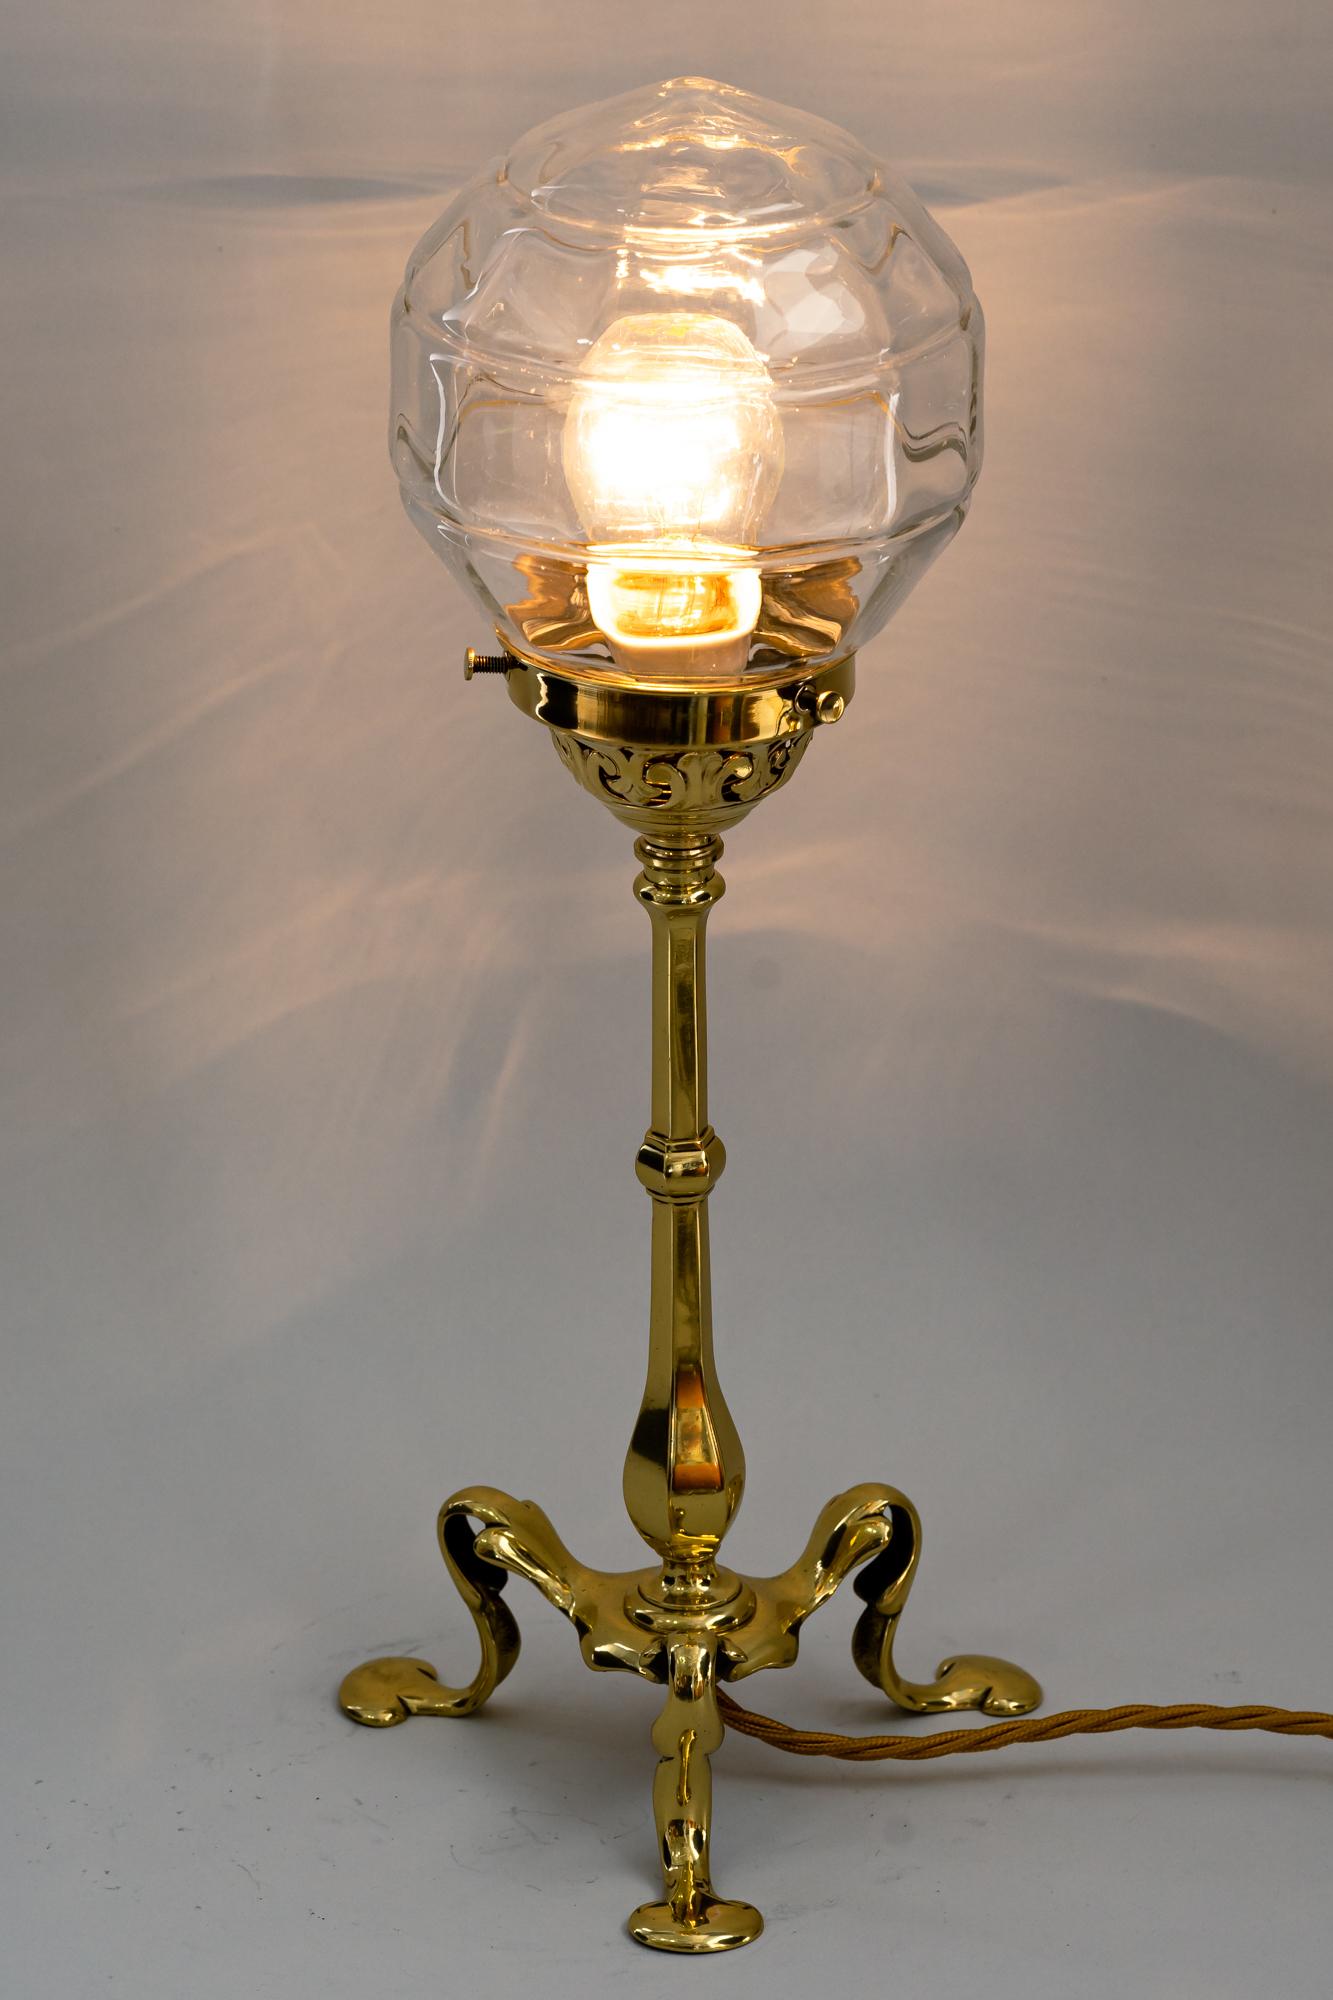 Brass Jugendstil Table Lamp with Original Glass Shade, Vienna, Around 1910s